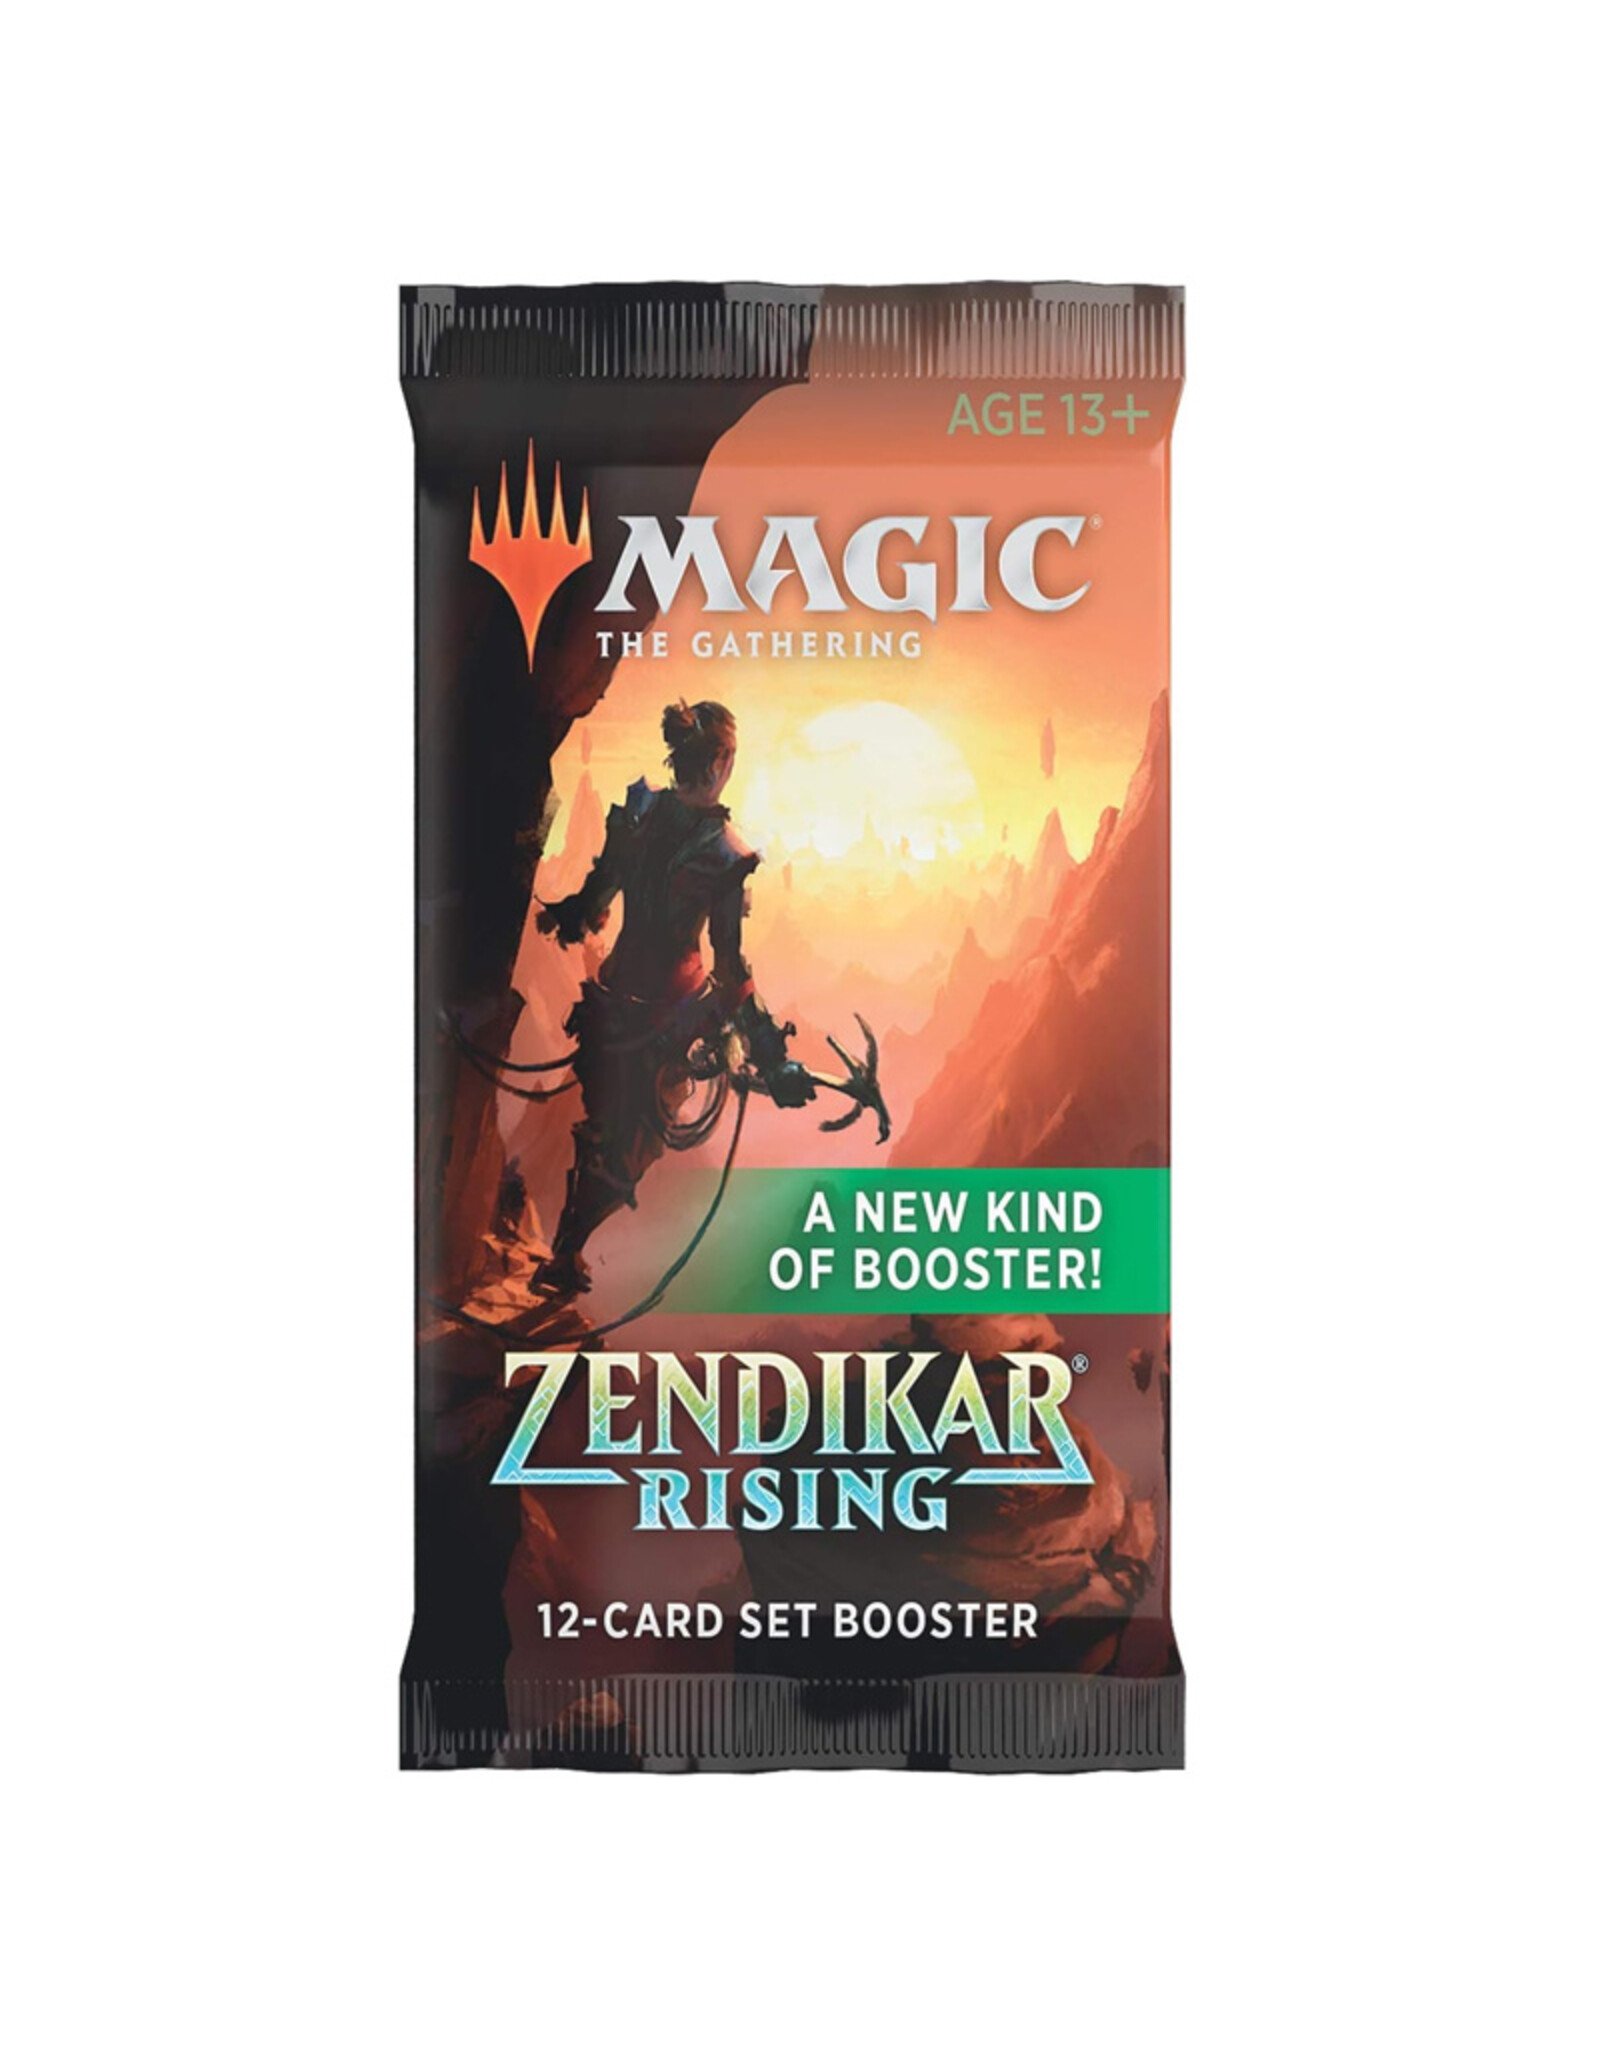 Wizards of the Coast MTG Zendikar Rising Set Booster Pack